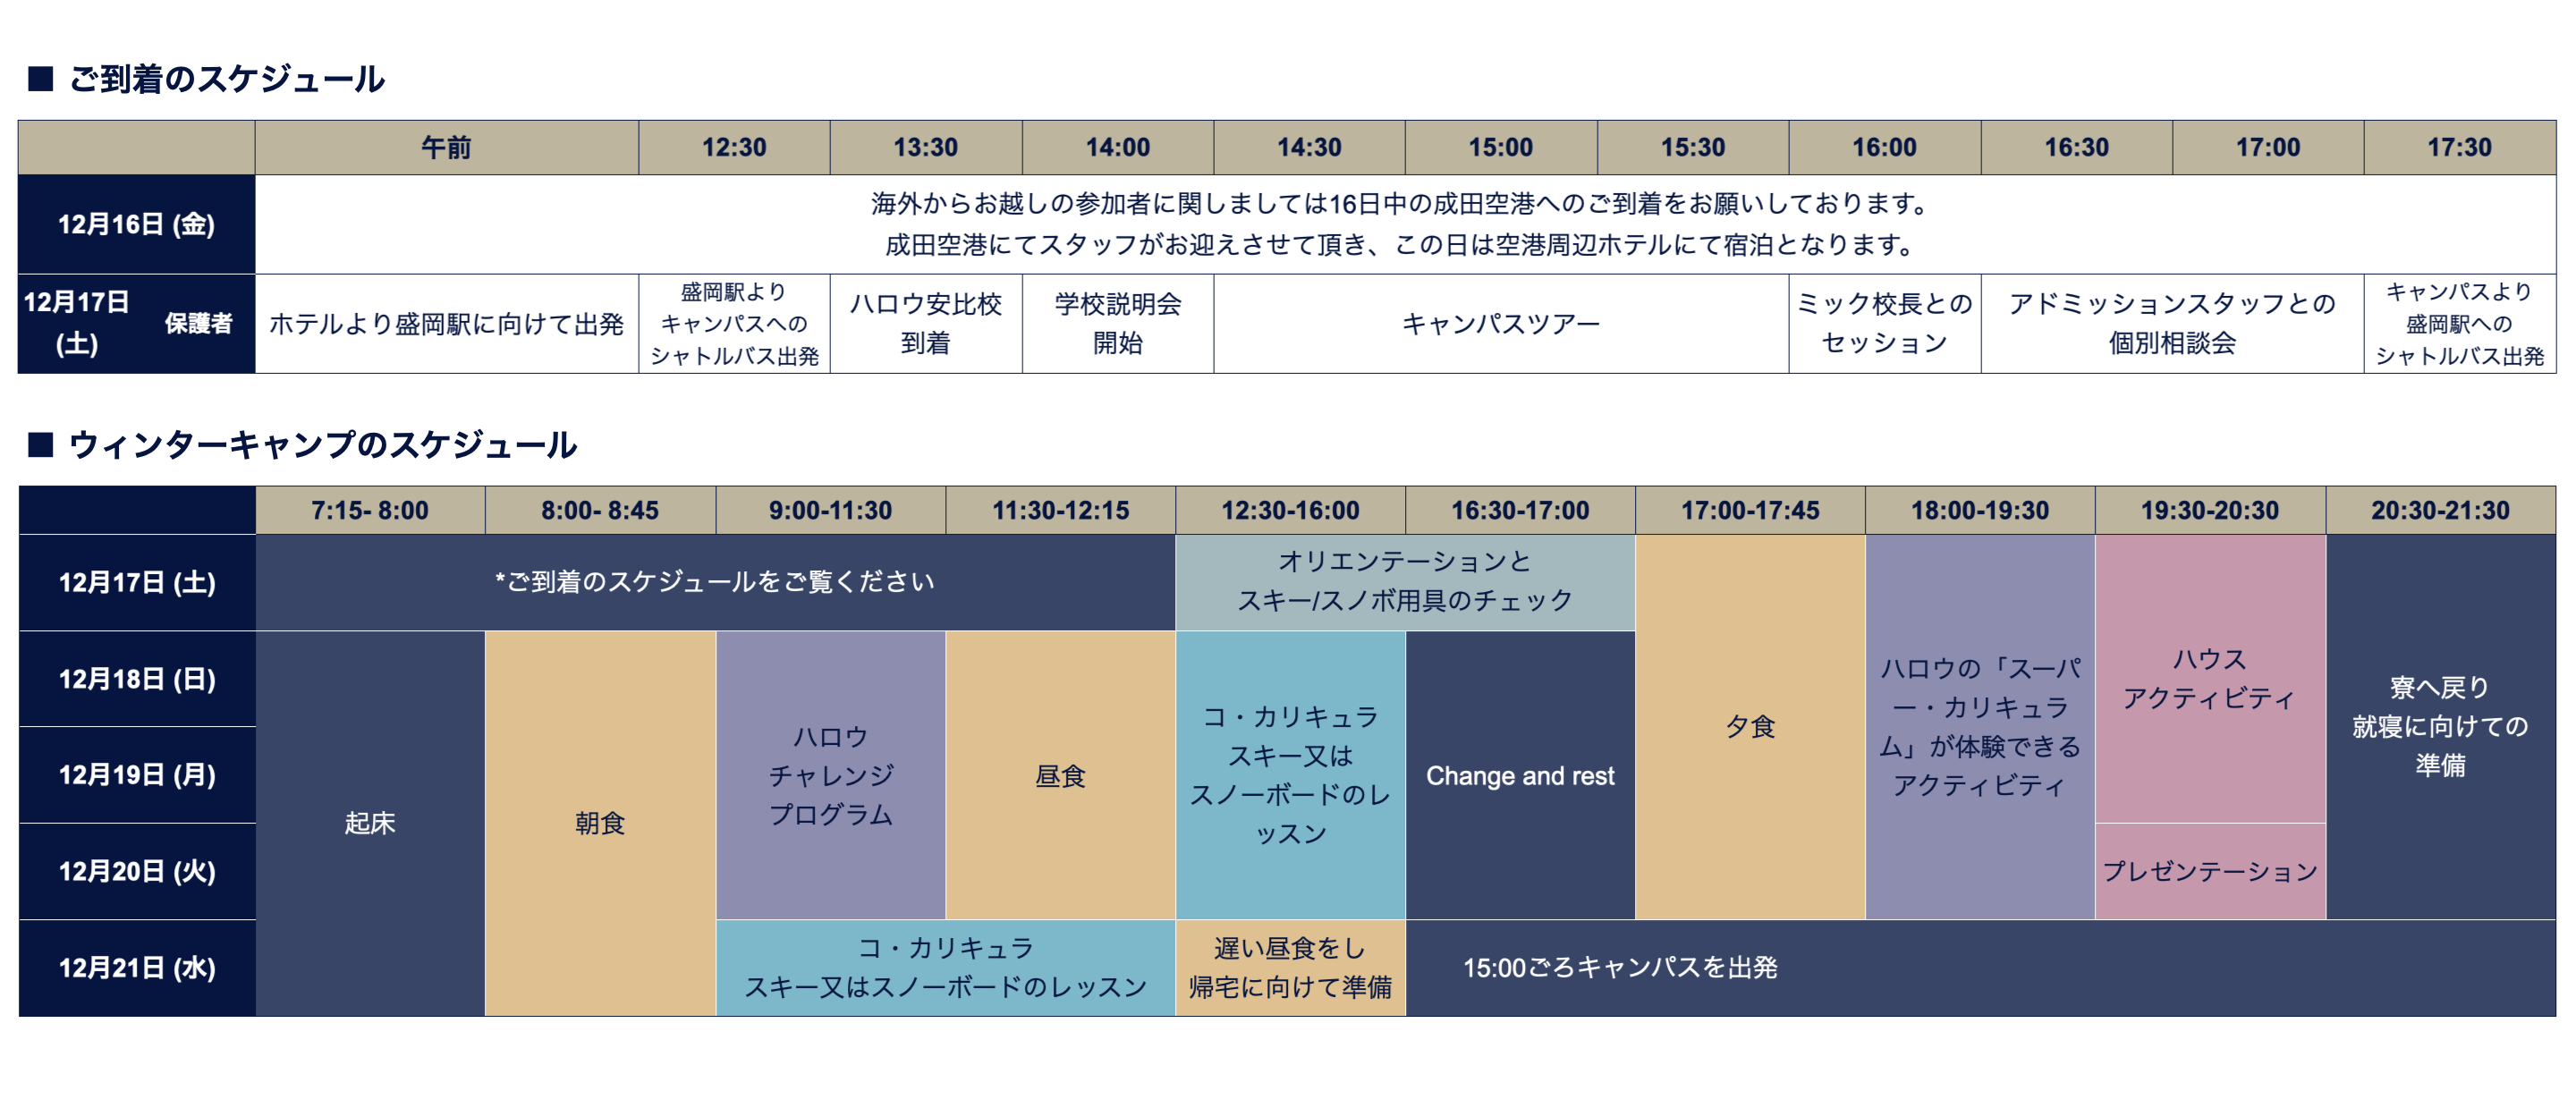 JP_winter camp_schedule